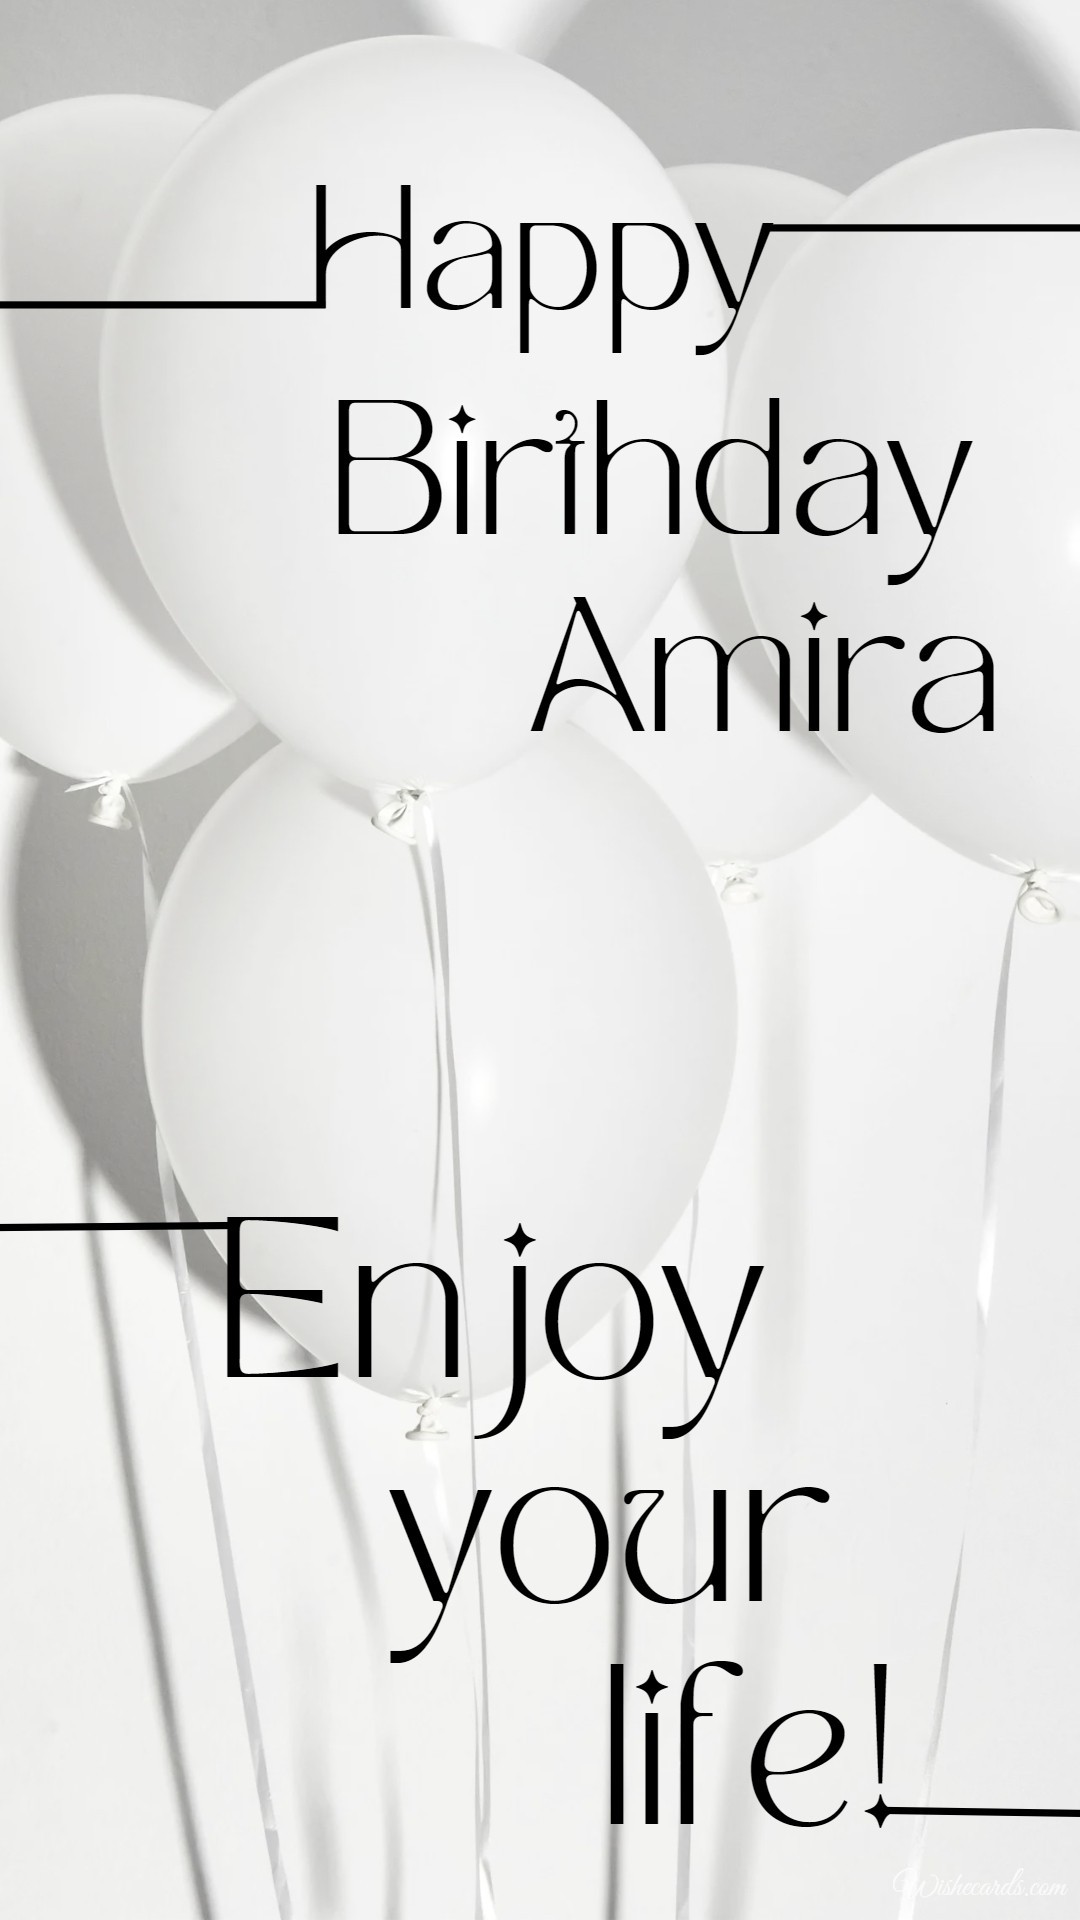 Happy Birthday Amira Image